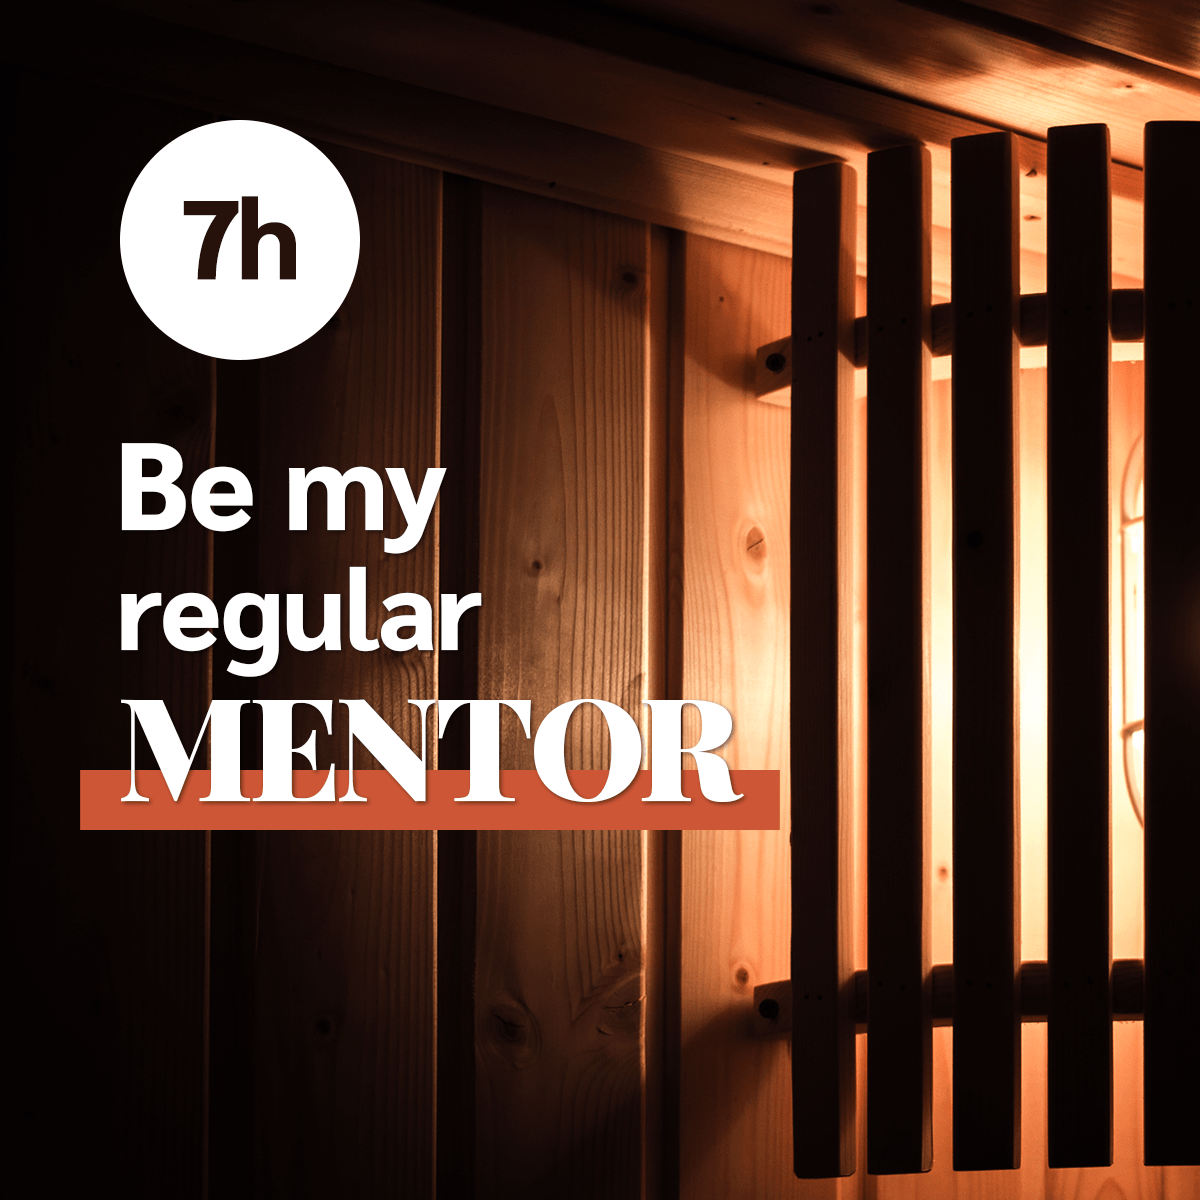 Be my regular mentor